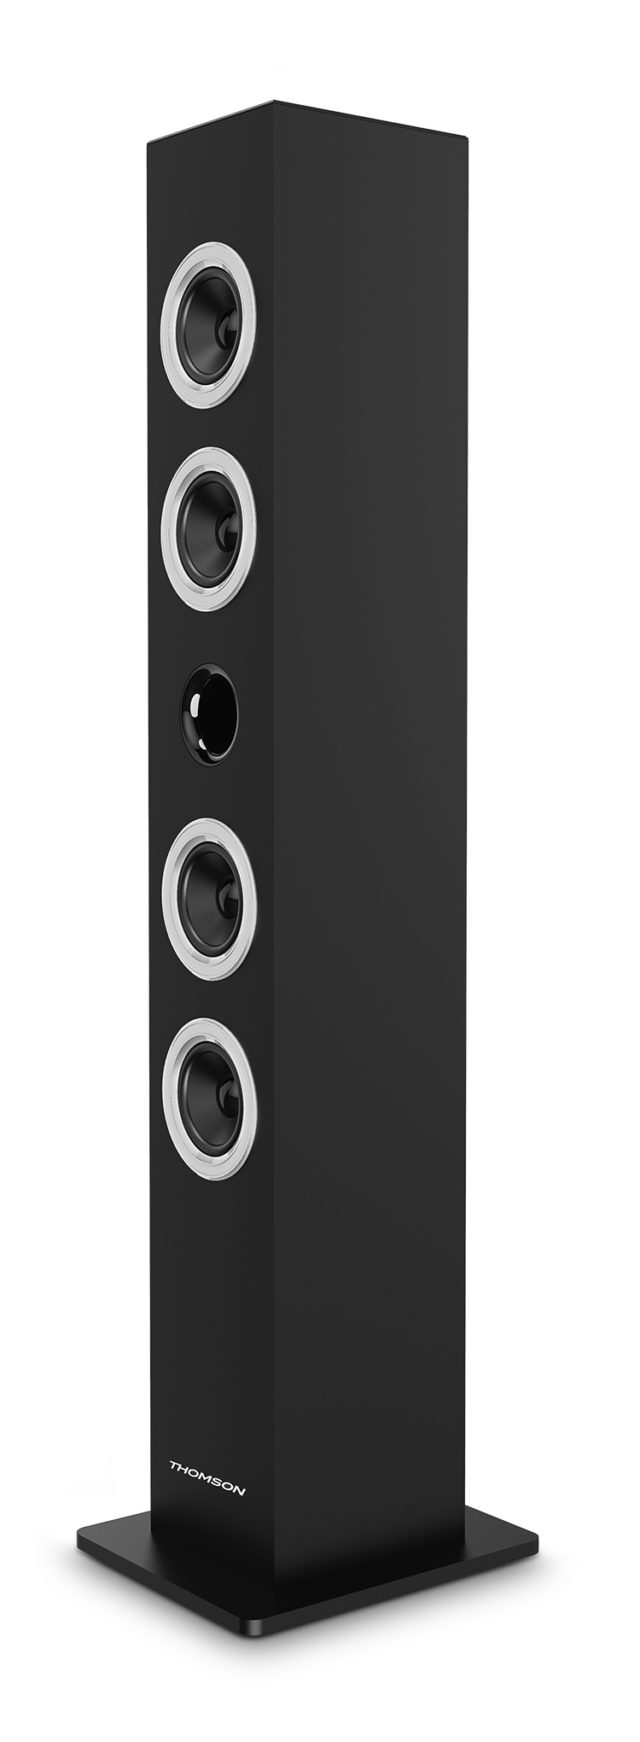 Multimedia tower / CD player (black) - Packshot